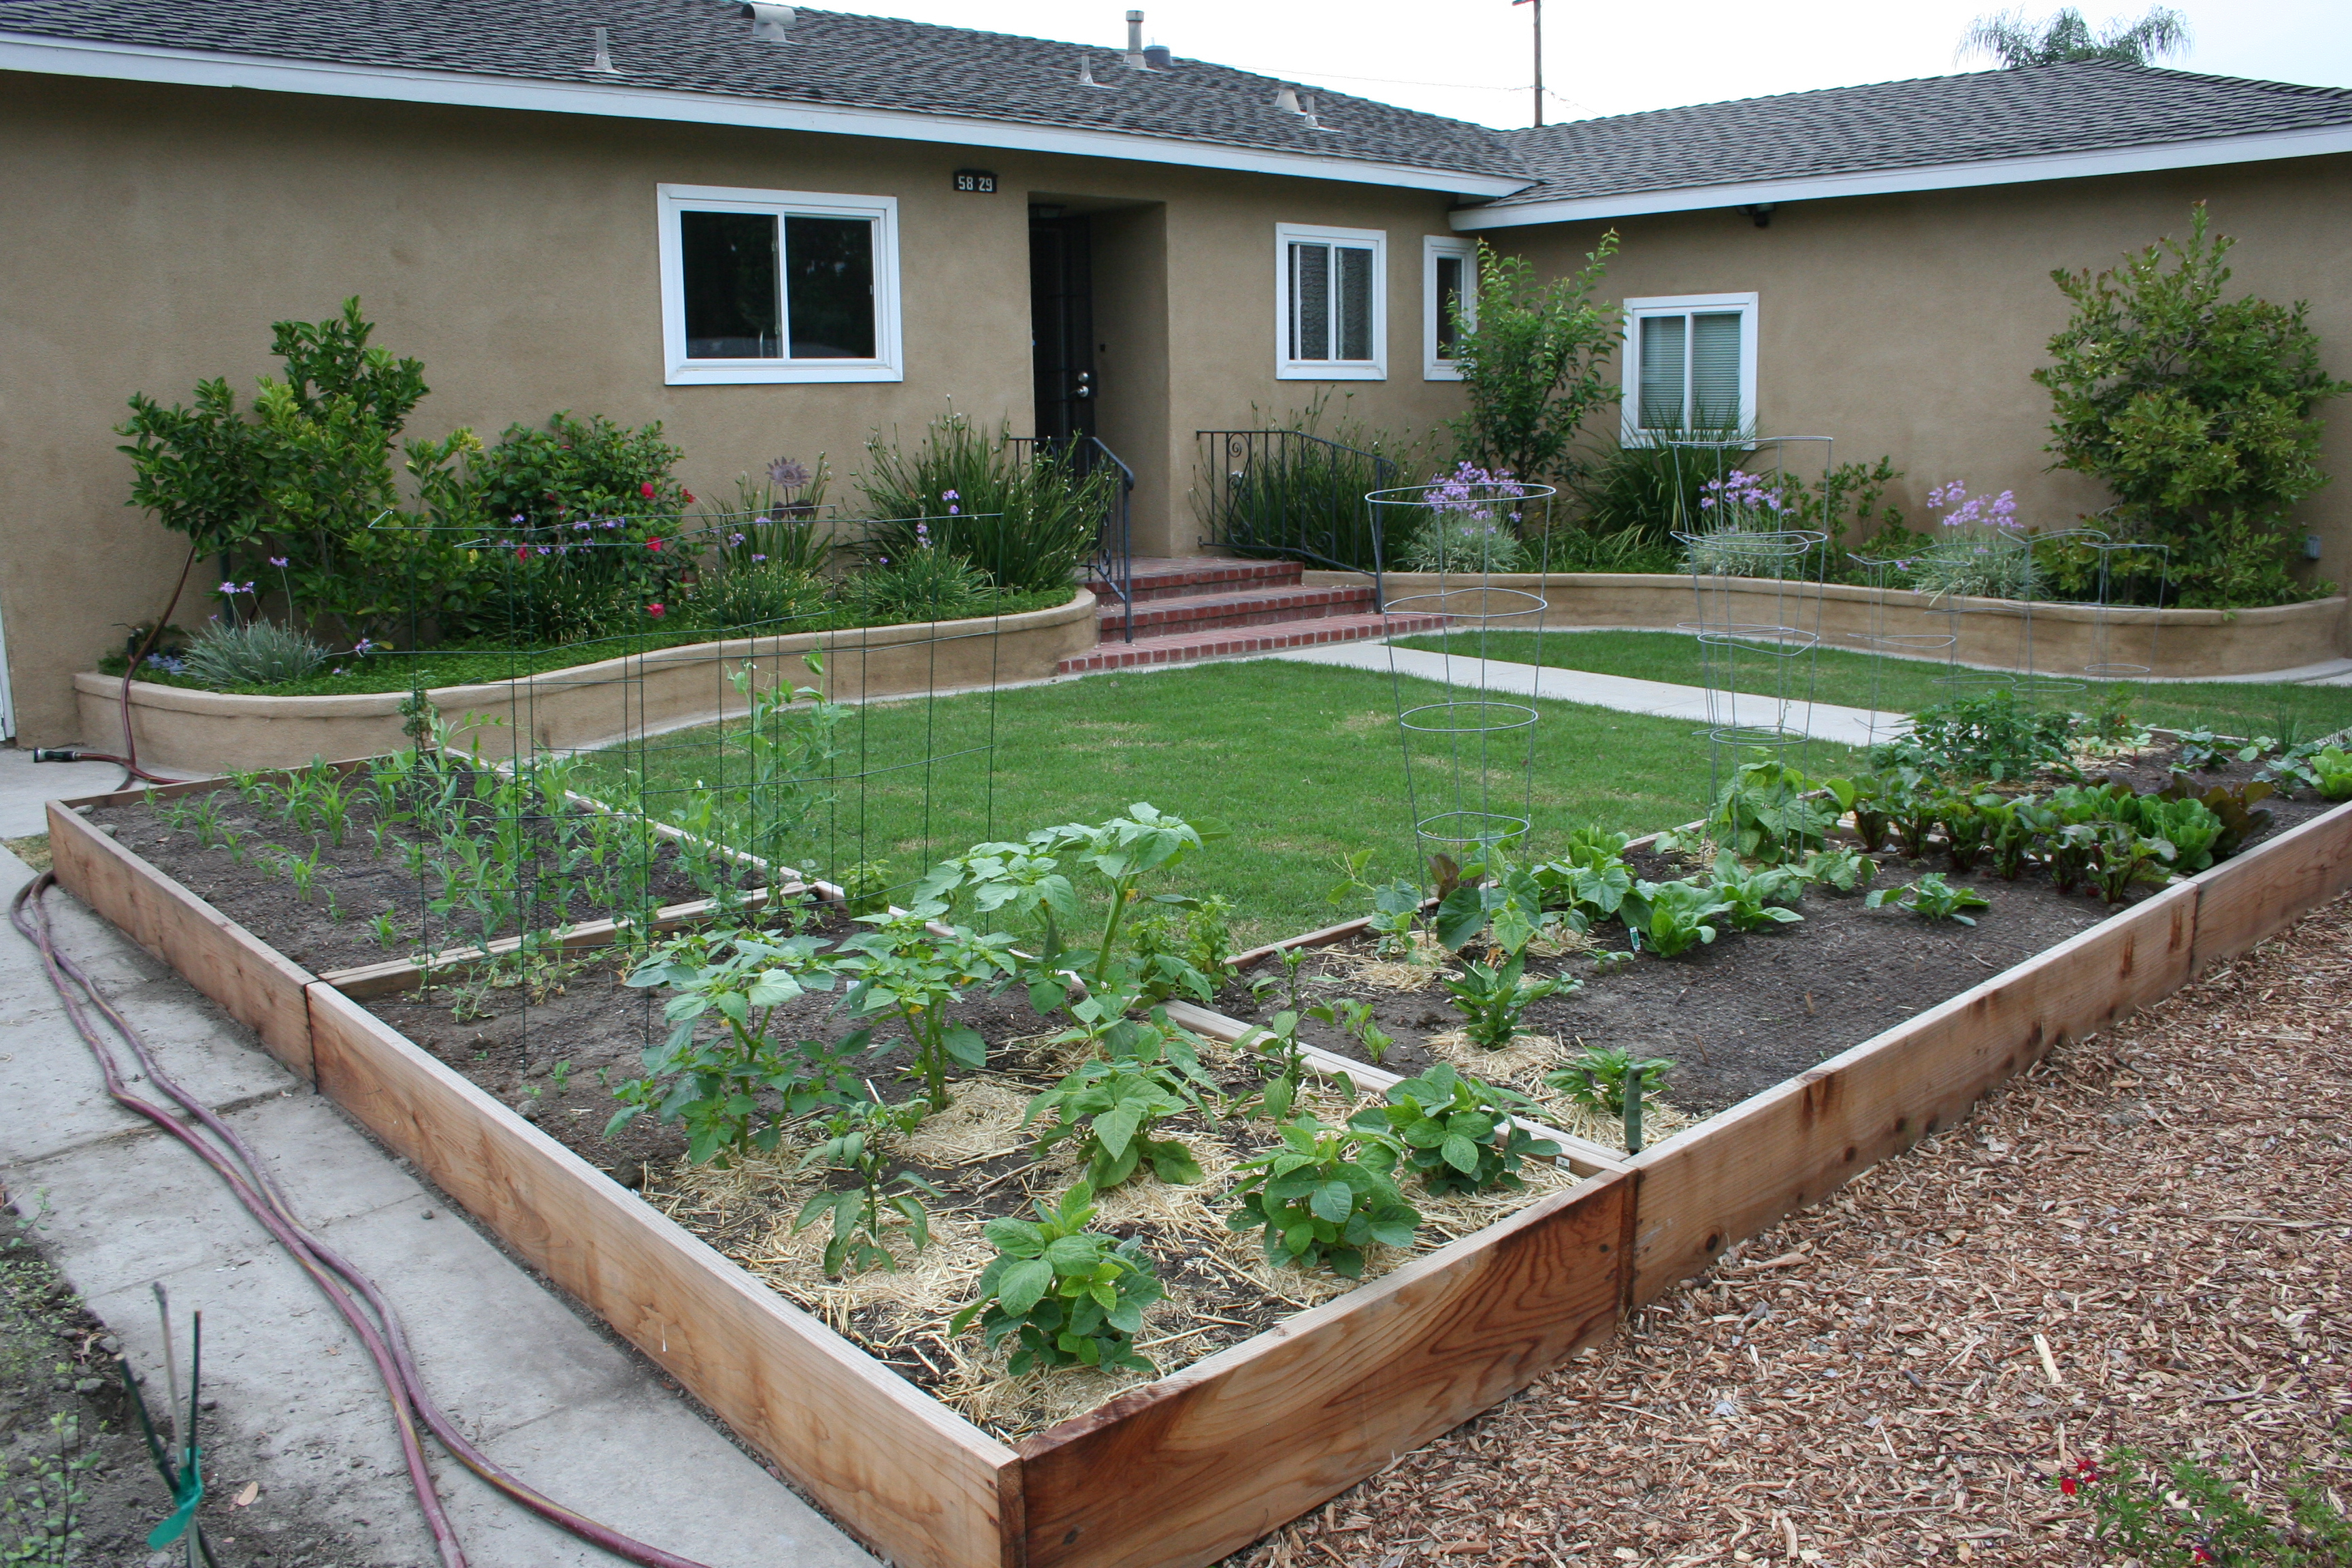 10 Great Front Yard Vegetable Garden Ideas 2020